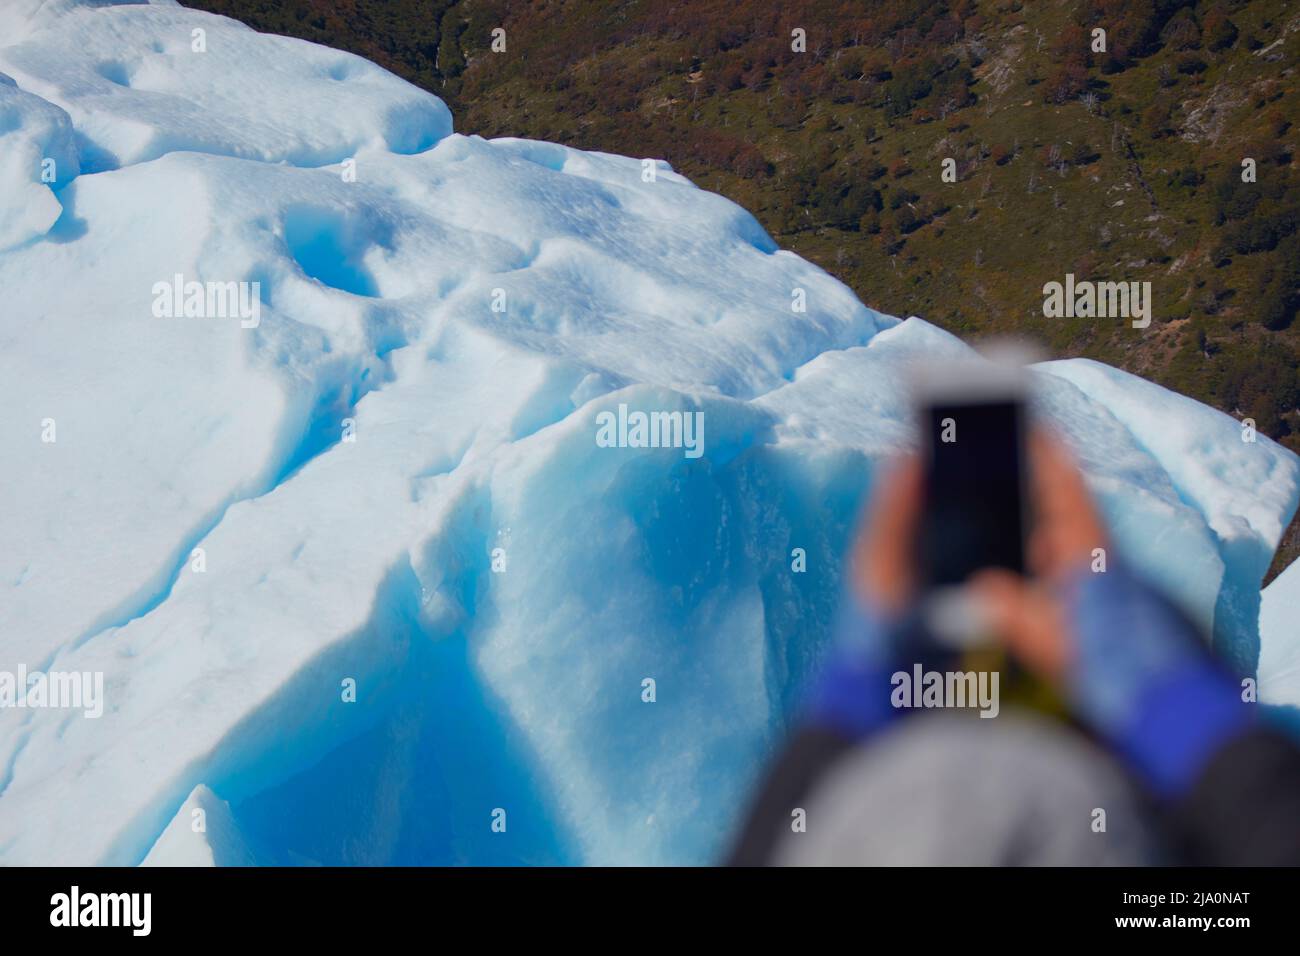 Un touriste qui prend des photos du glacier Perito Moreno avec un smartphone, parc national de Los Glaciares, Argentine. Banque D'Images